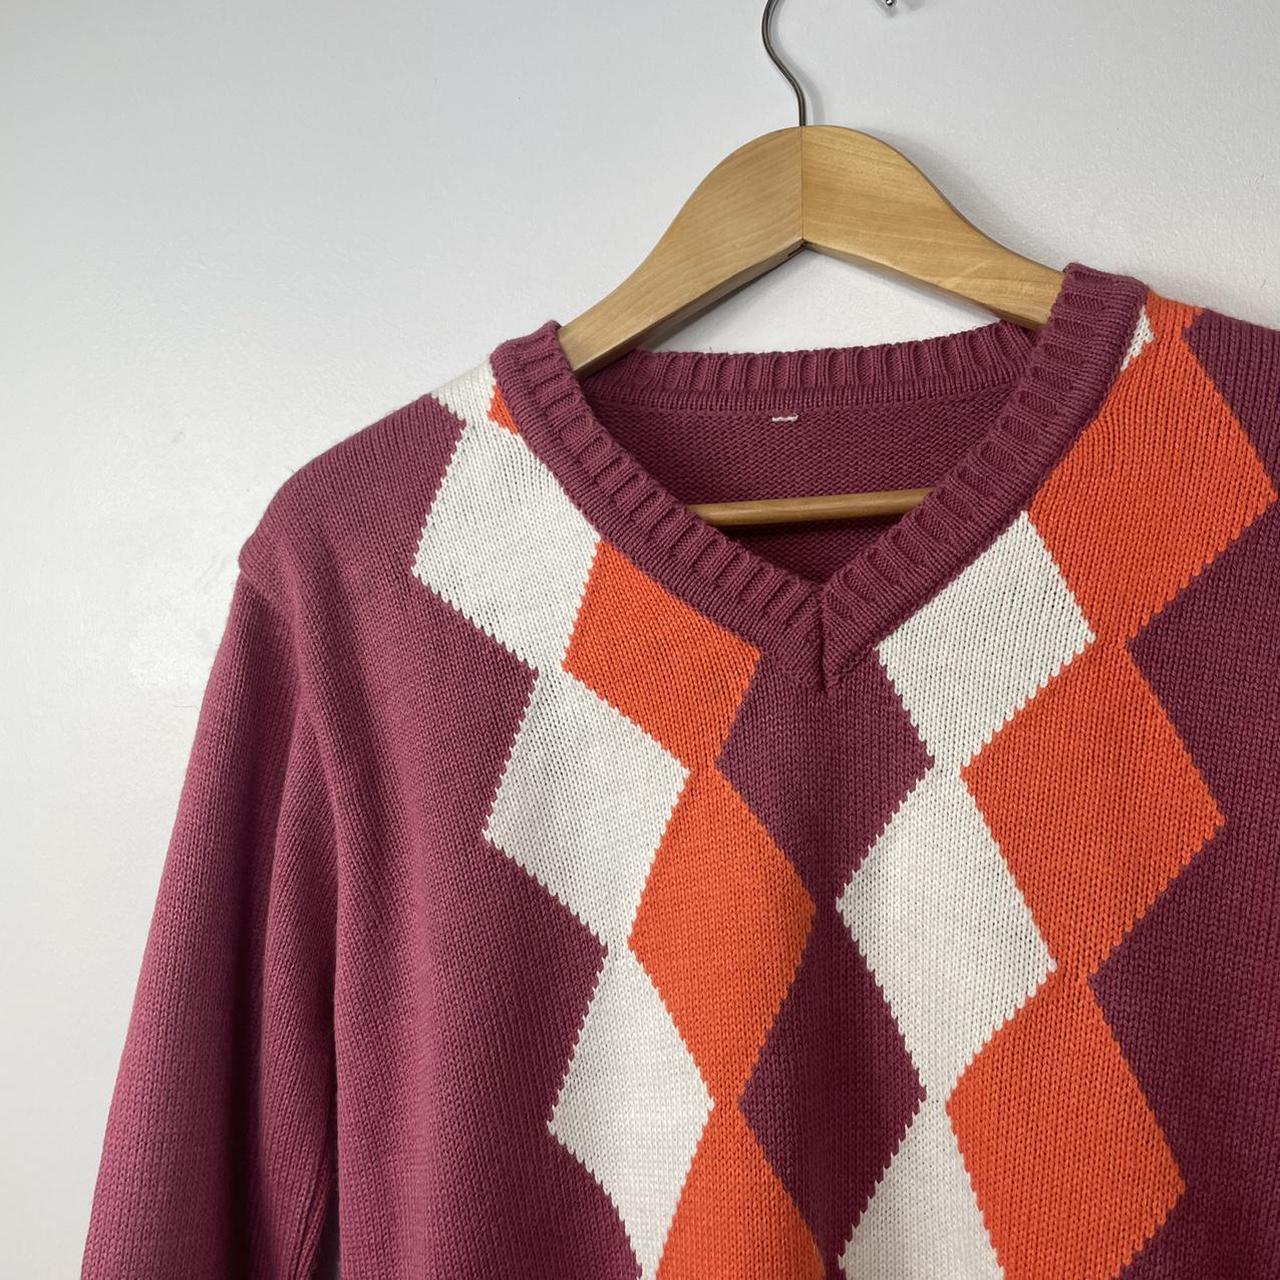 Product Image 2 - Vintage Y2K Argyle Multicoloured Jumper/Knitwear

-